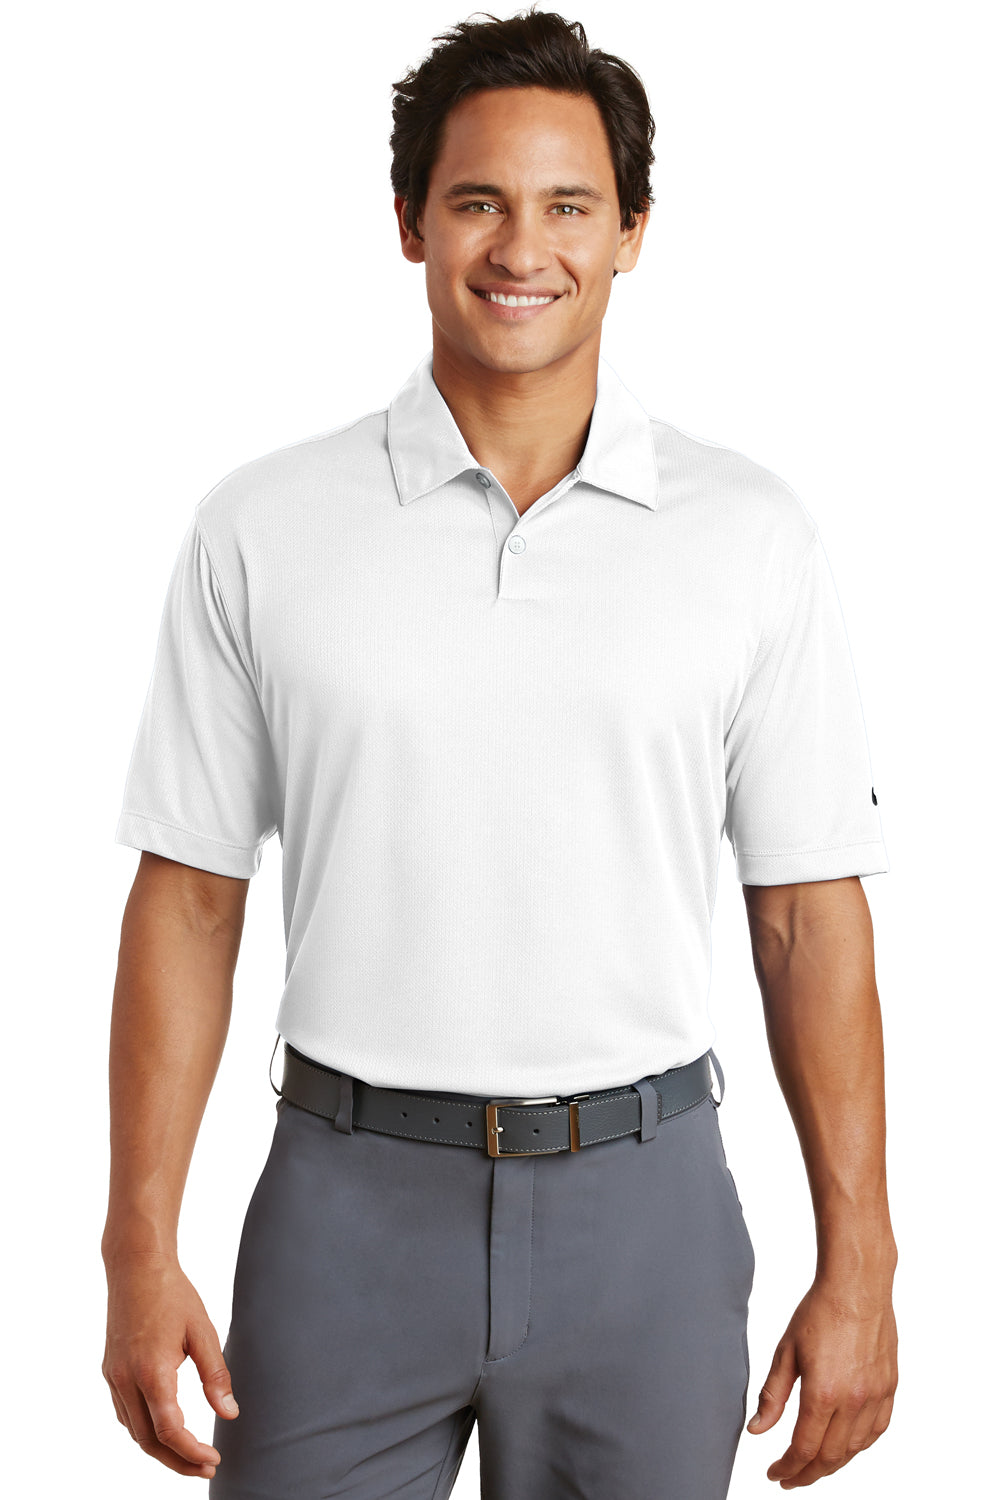 Nike 373749 Mens Dri-Fit Moisture Wicking Short Sleeve Polo Shirt White Front